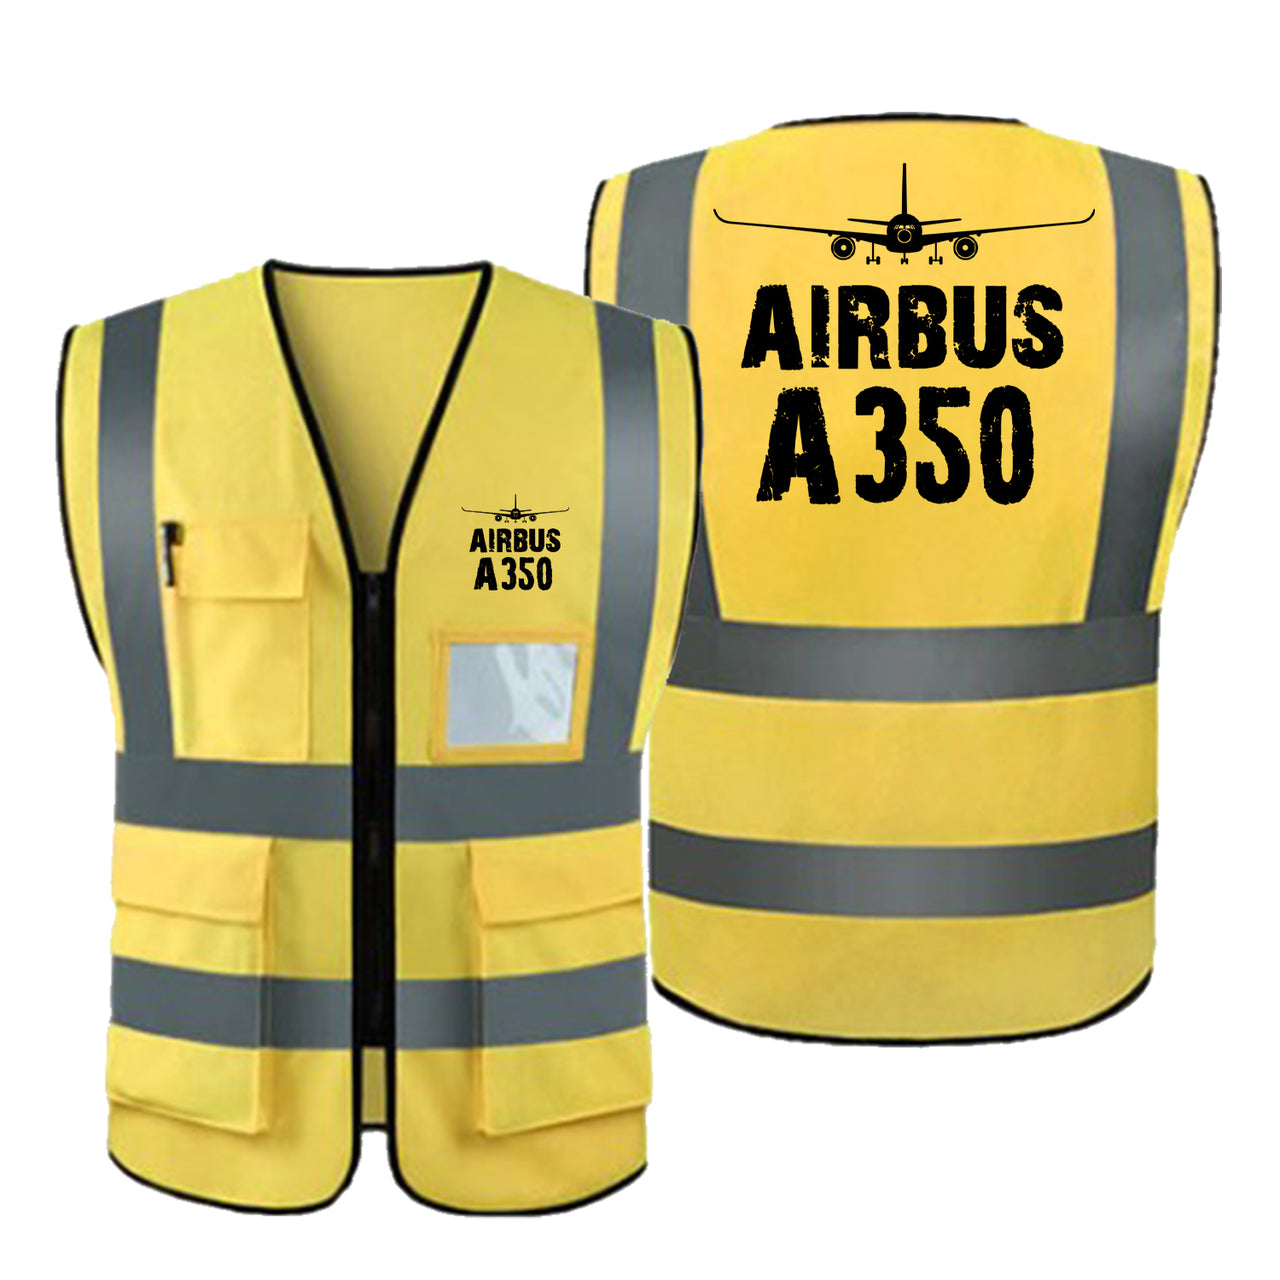 Airbus A350 & Plane Designed Reflective Vests